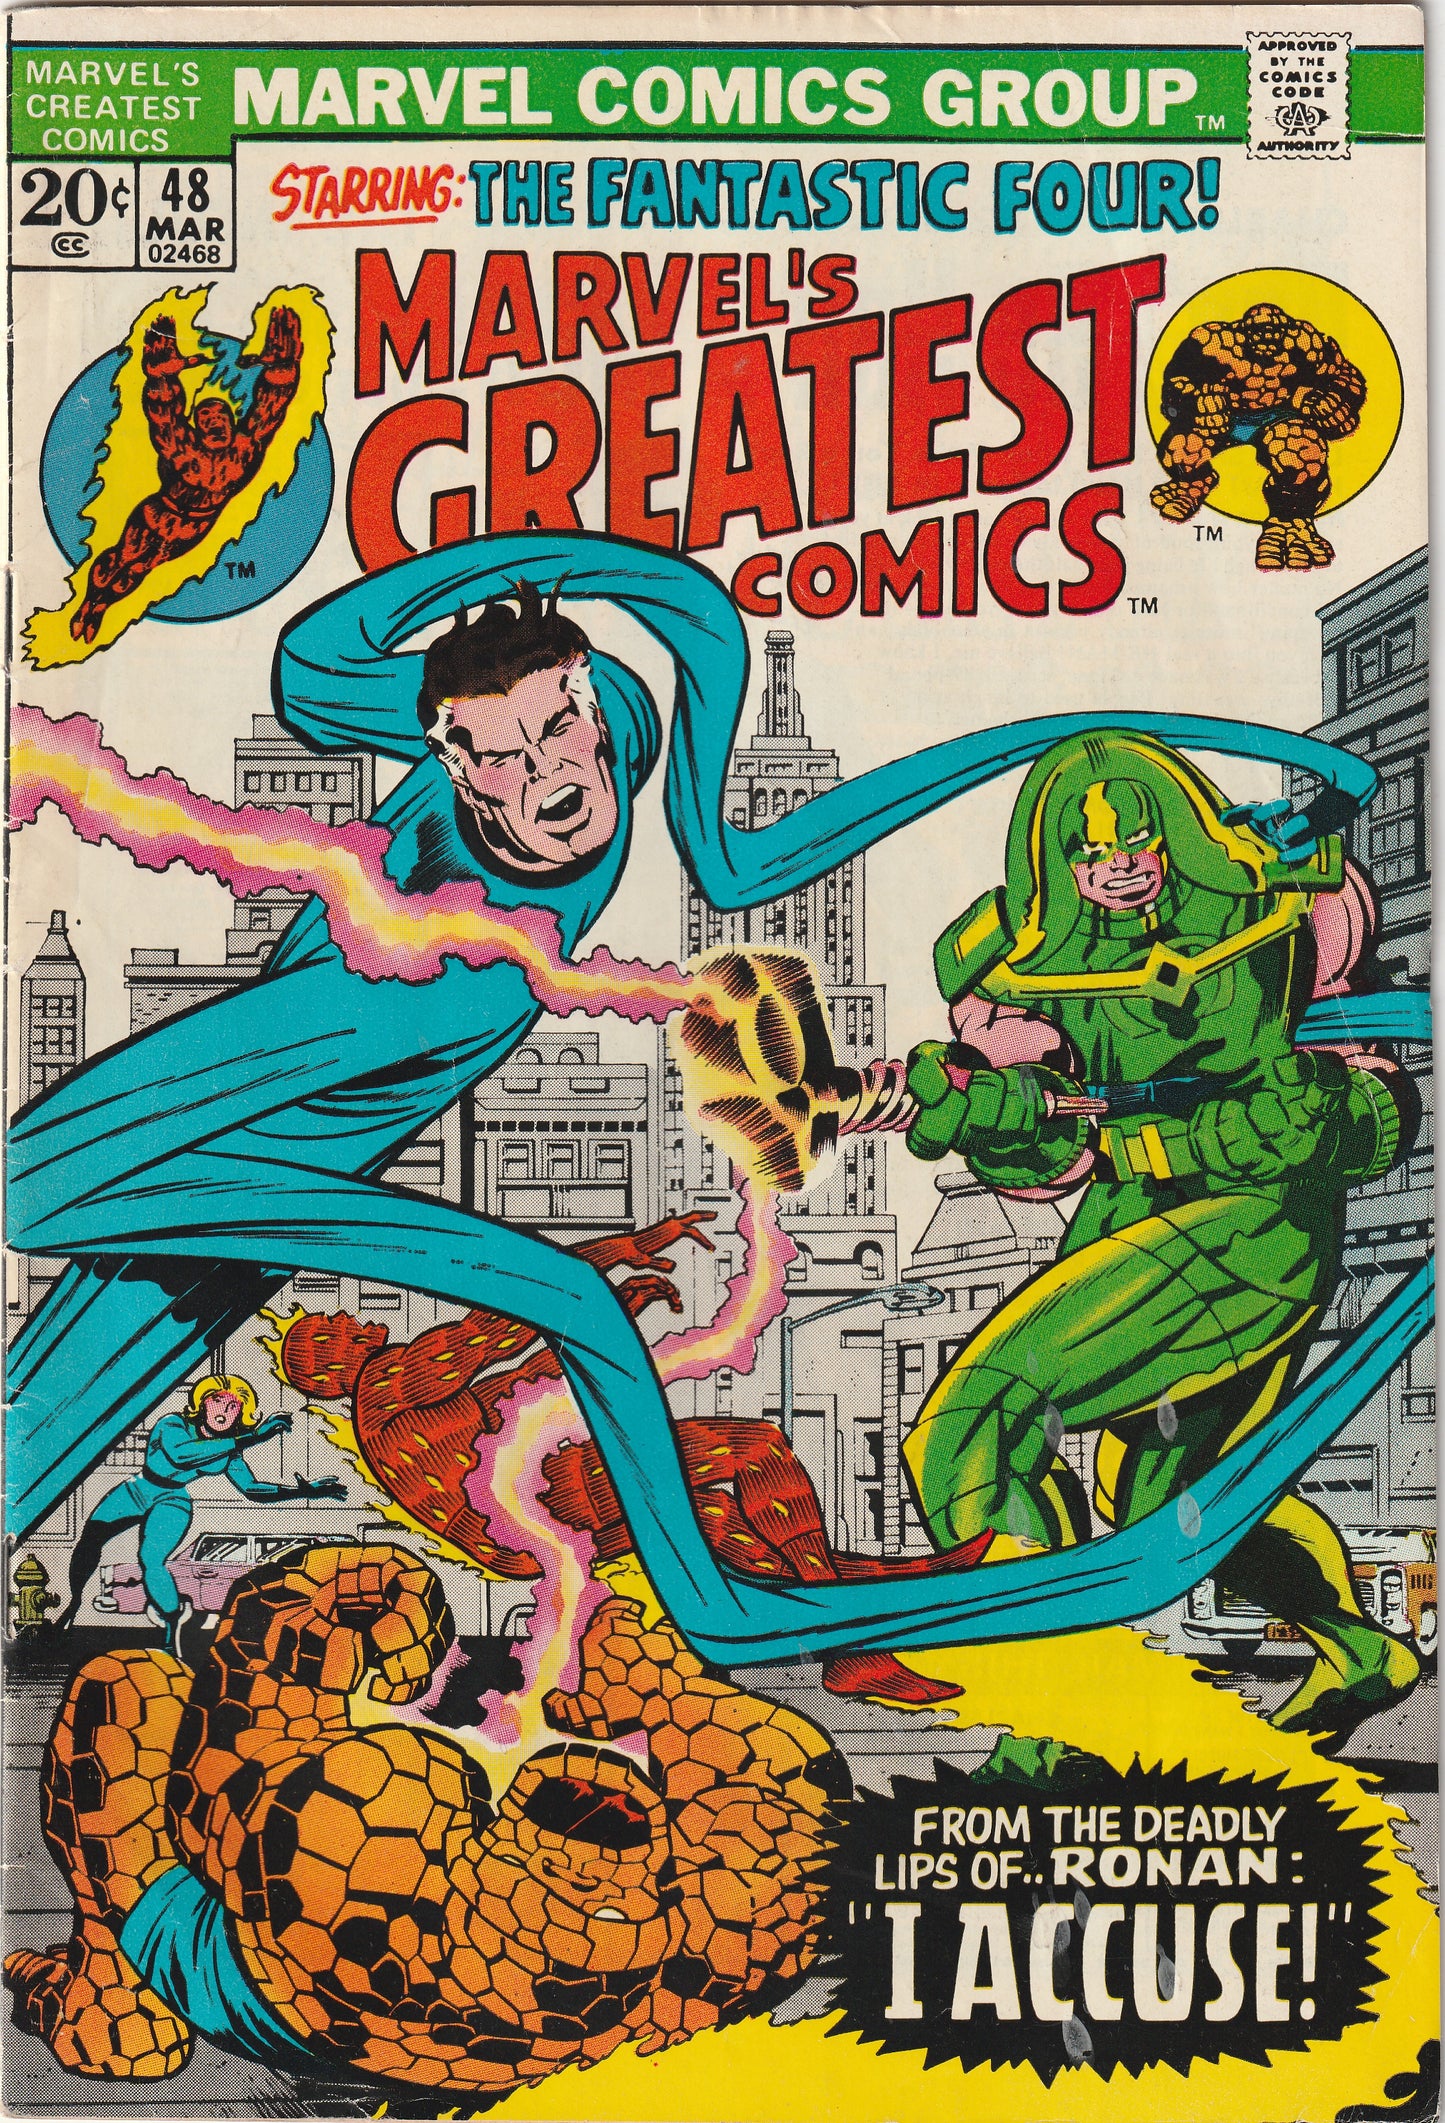 Marvel's Greatest Comics #48 (1974) - The Mystery of Alicia